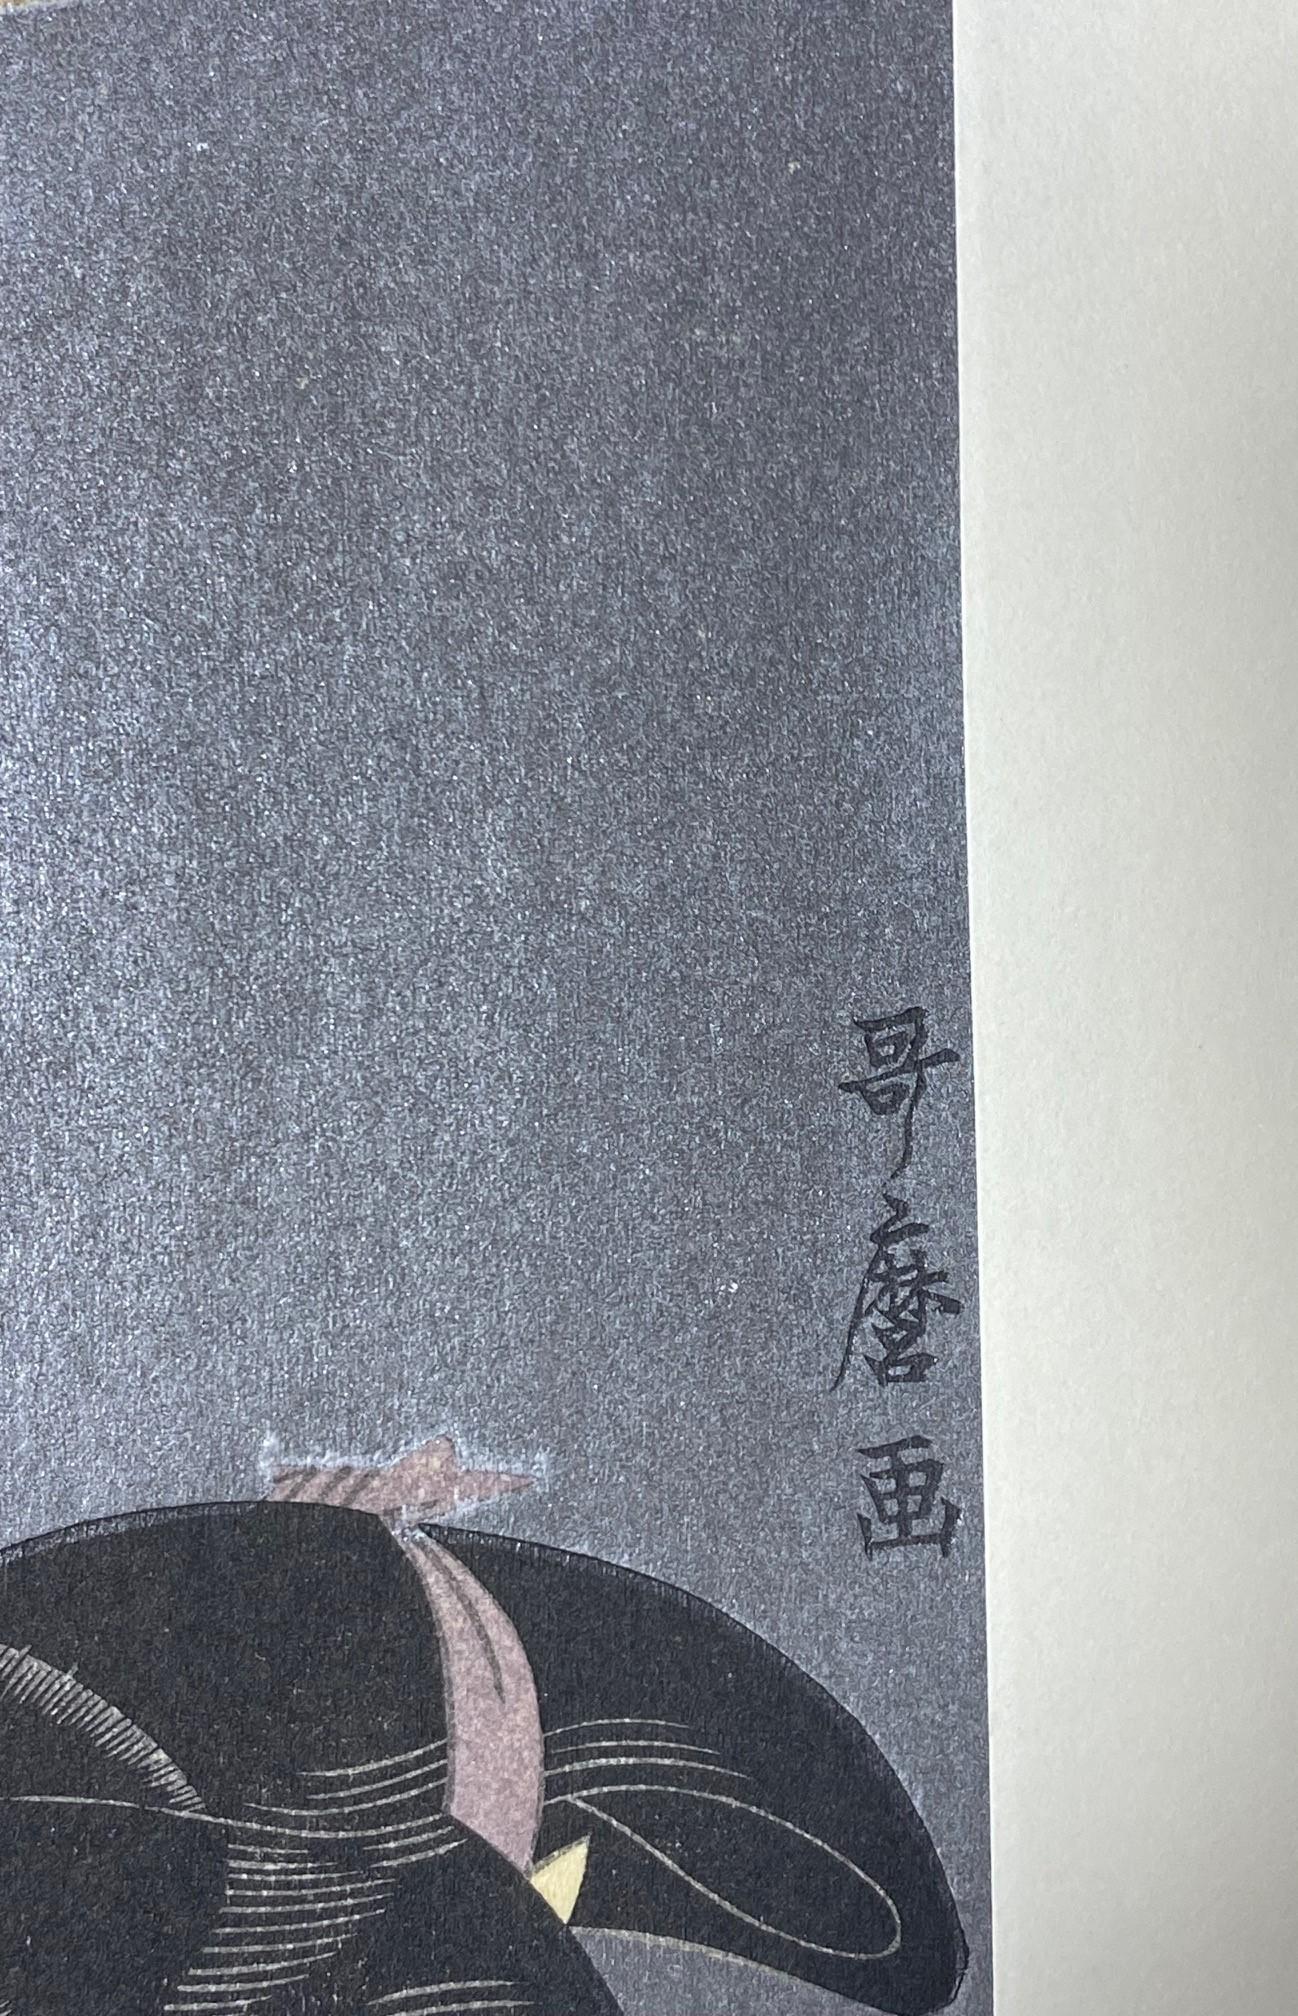 Japanese Woodblock Print of Three Edo Period Geisha Women One With Yellow Hat For Sale 5